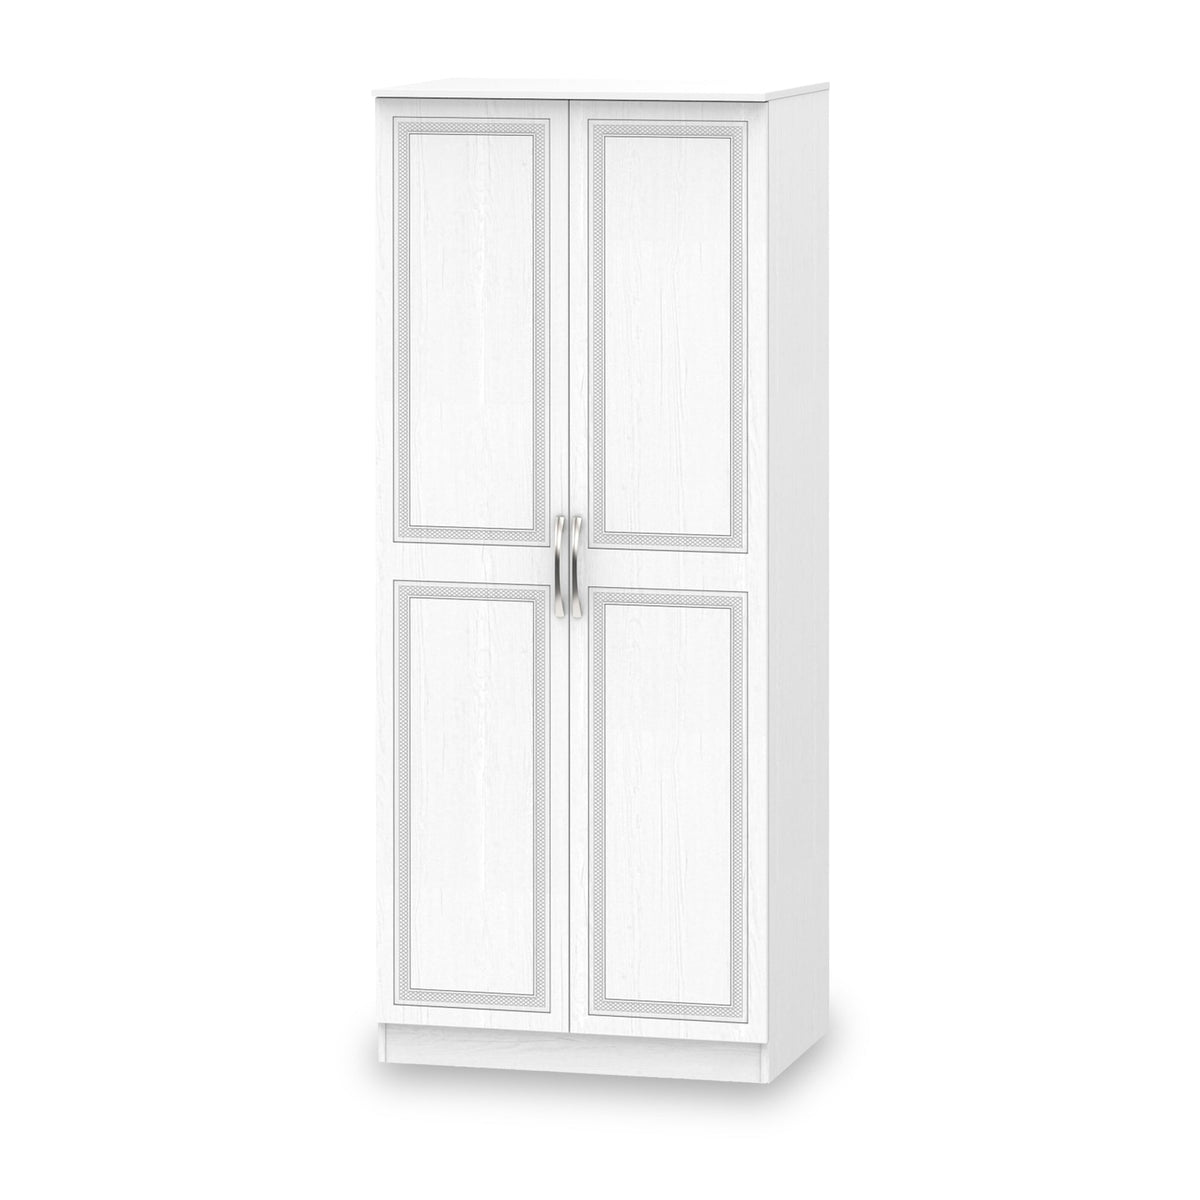 Killgarth White 2 Door Double Wardrobe from Roseland Furniture